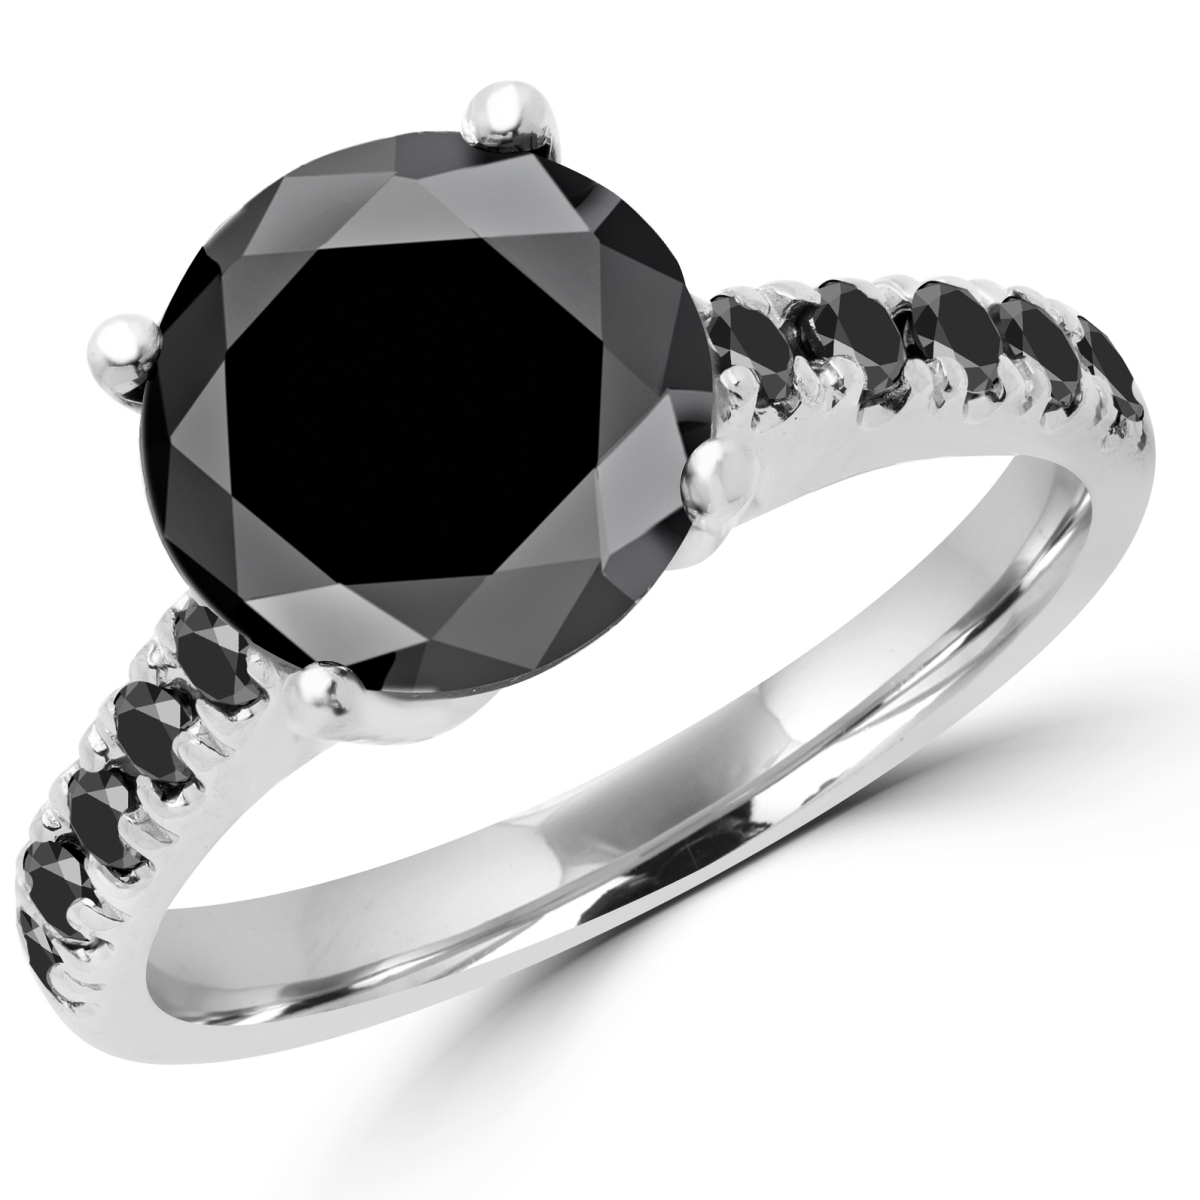 Majesty Diamonds MD160184 3.5 CTW Multi Stone Round Cut BlacK Diamond Engagement Ring in 14K